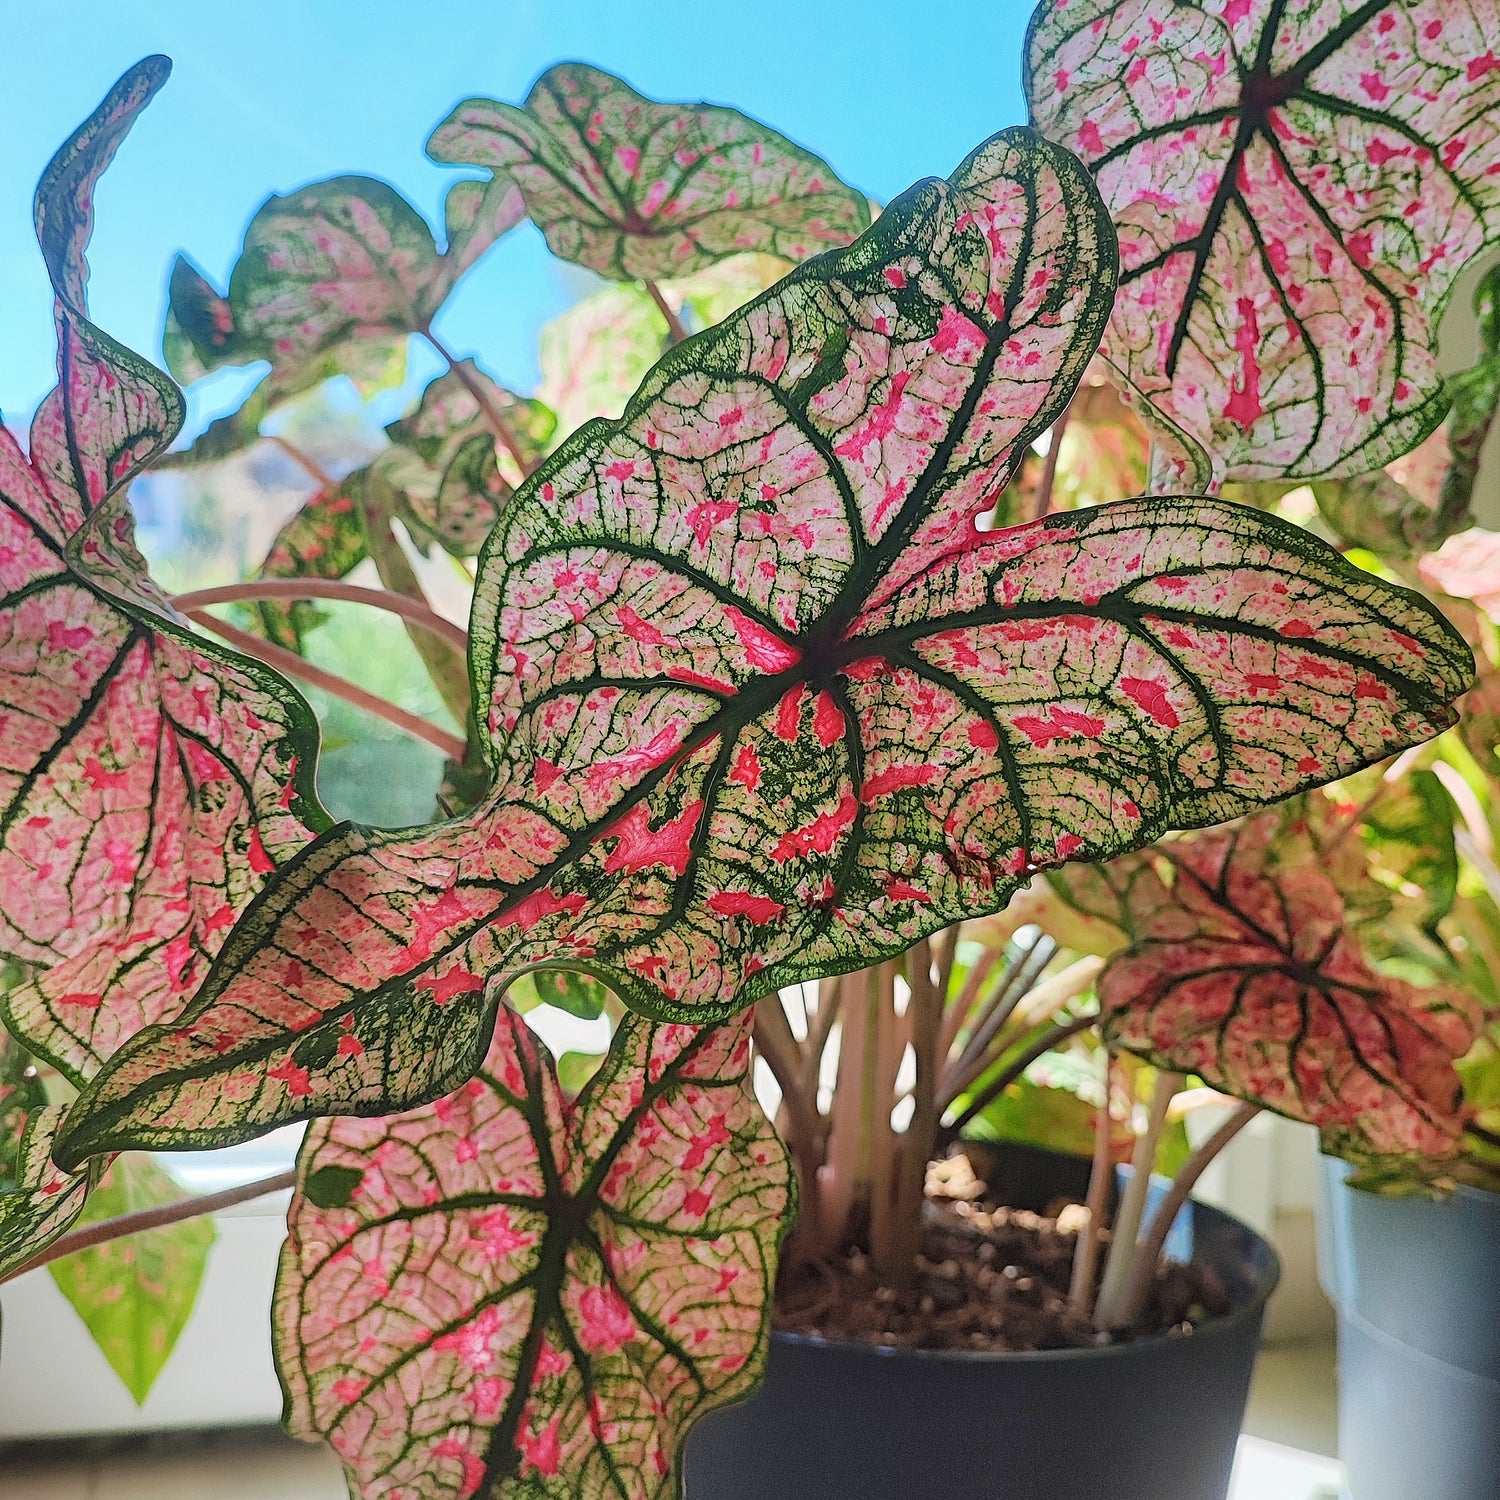 Caladium Splash of Wine (L), plant with pink leaves